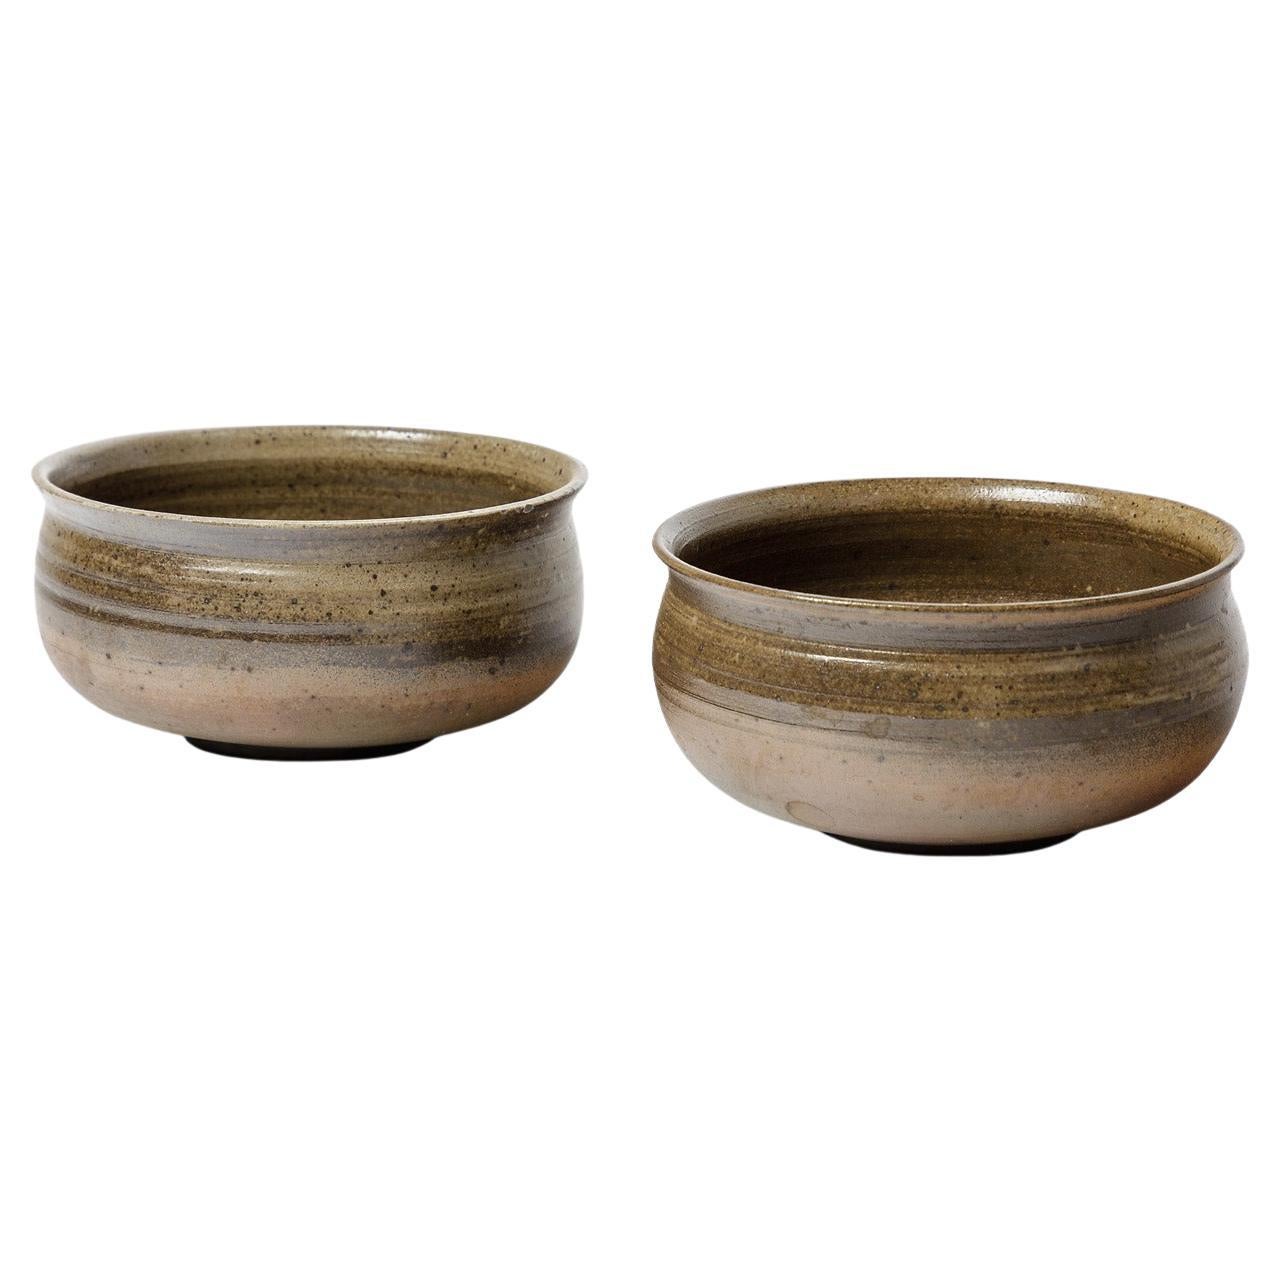 Pair of 20th century brown ceramic bowls by Askett La Borne design 1970